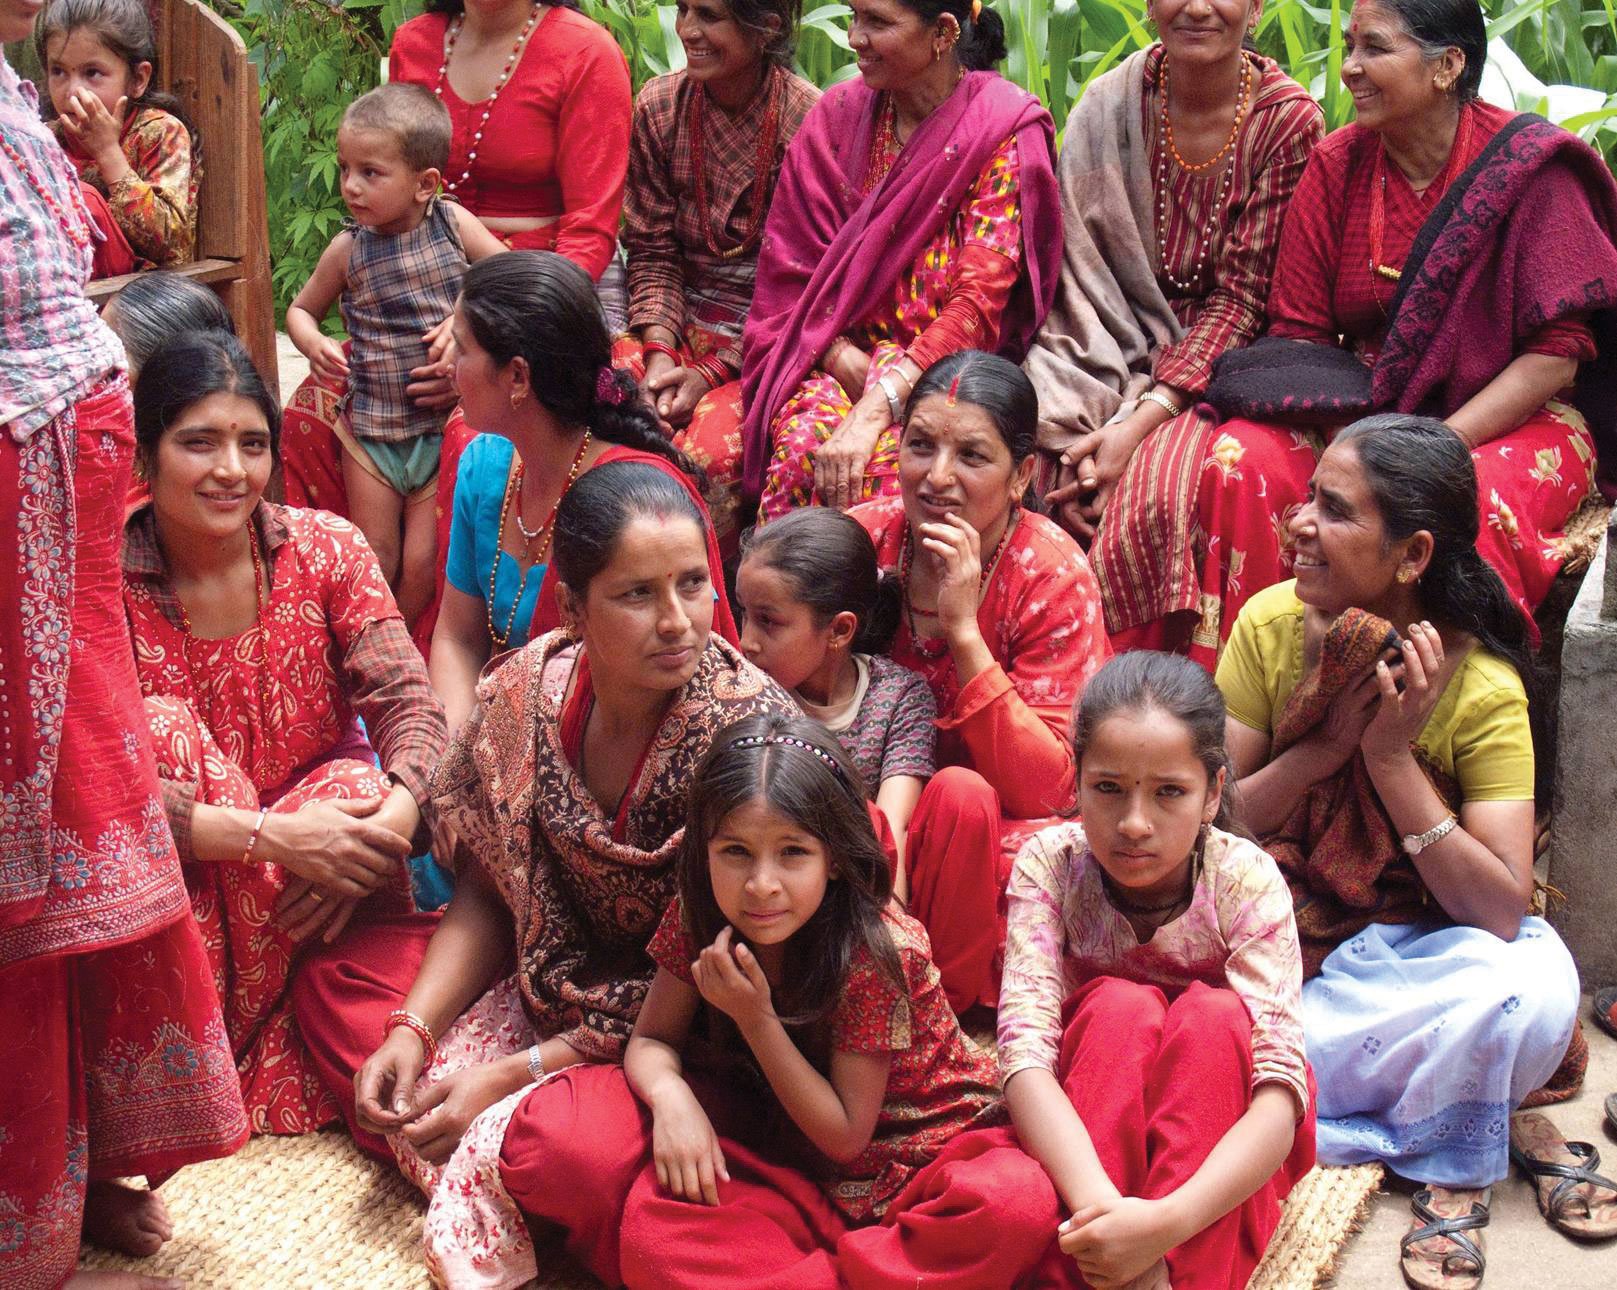 Nepalese women gathered